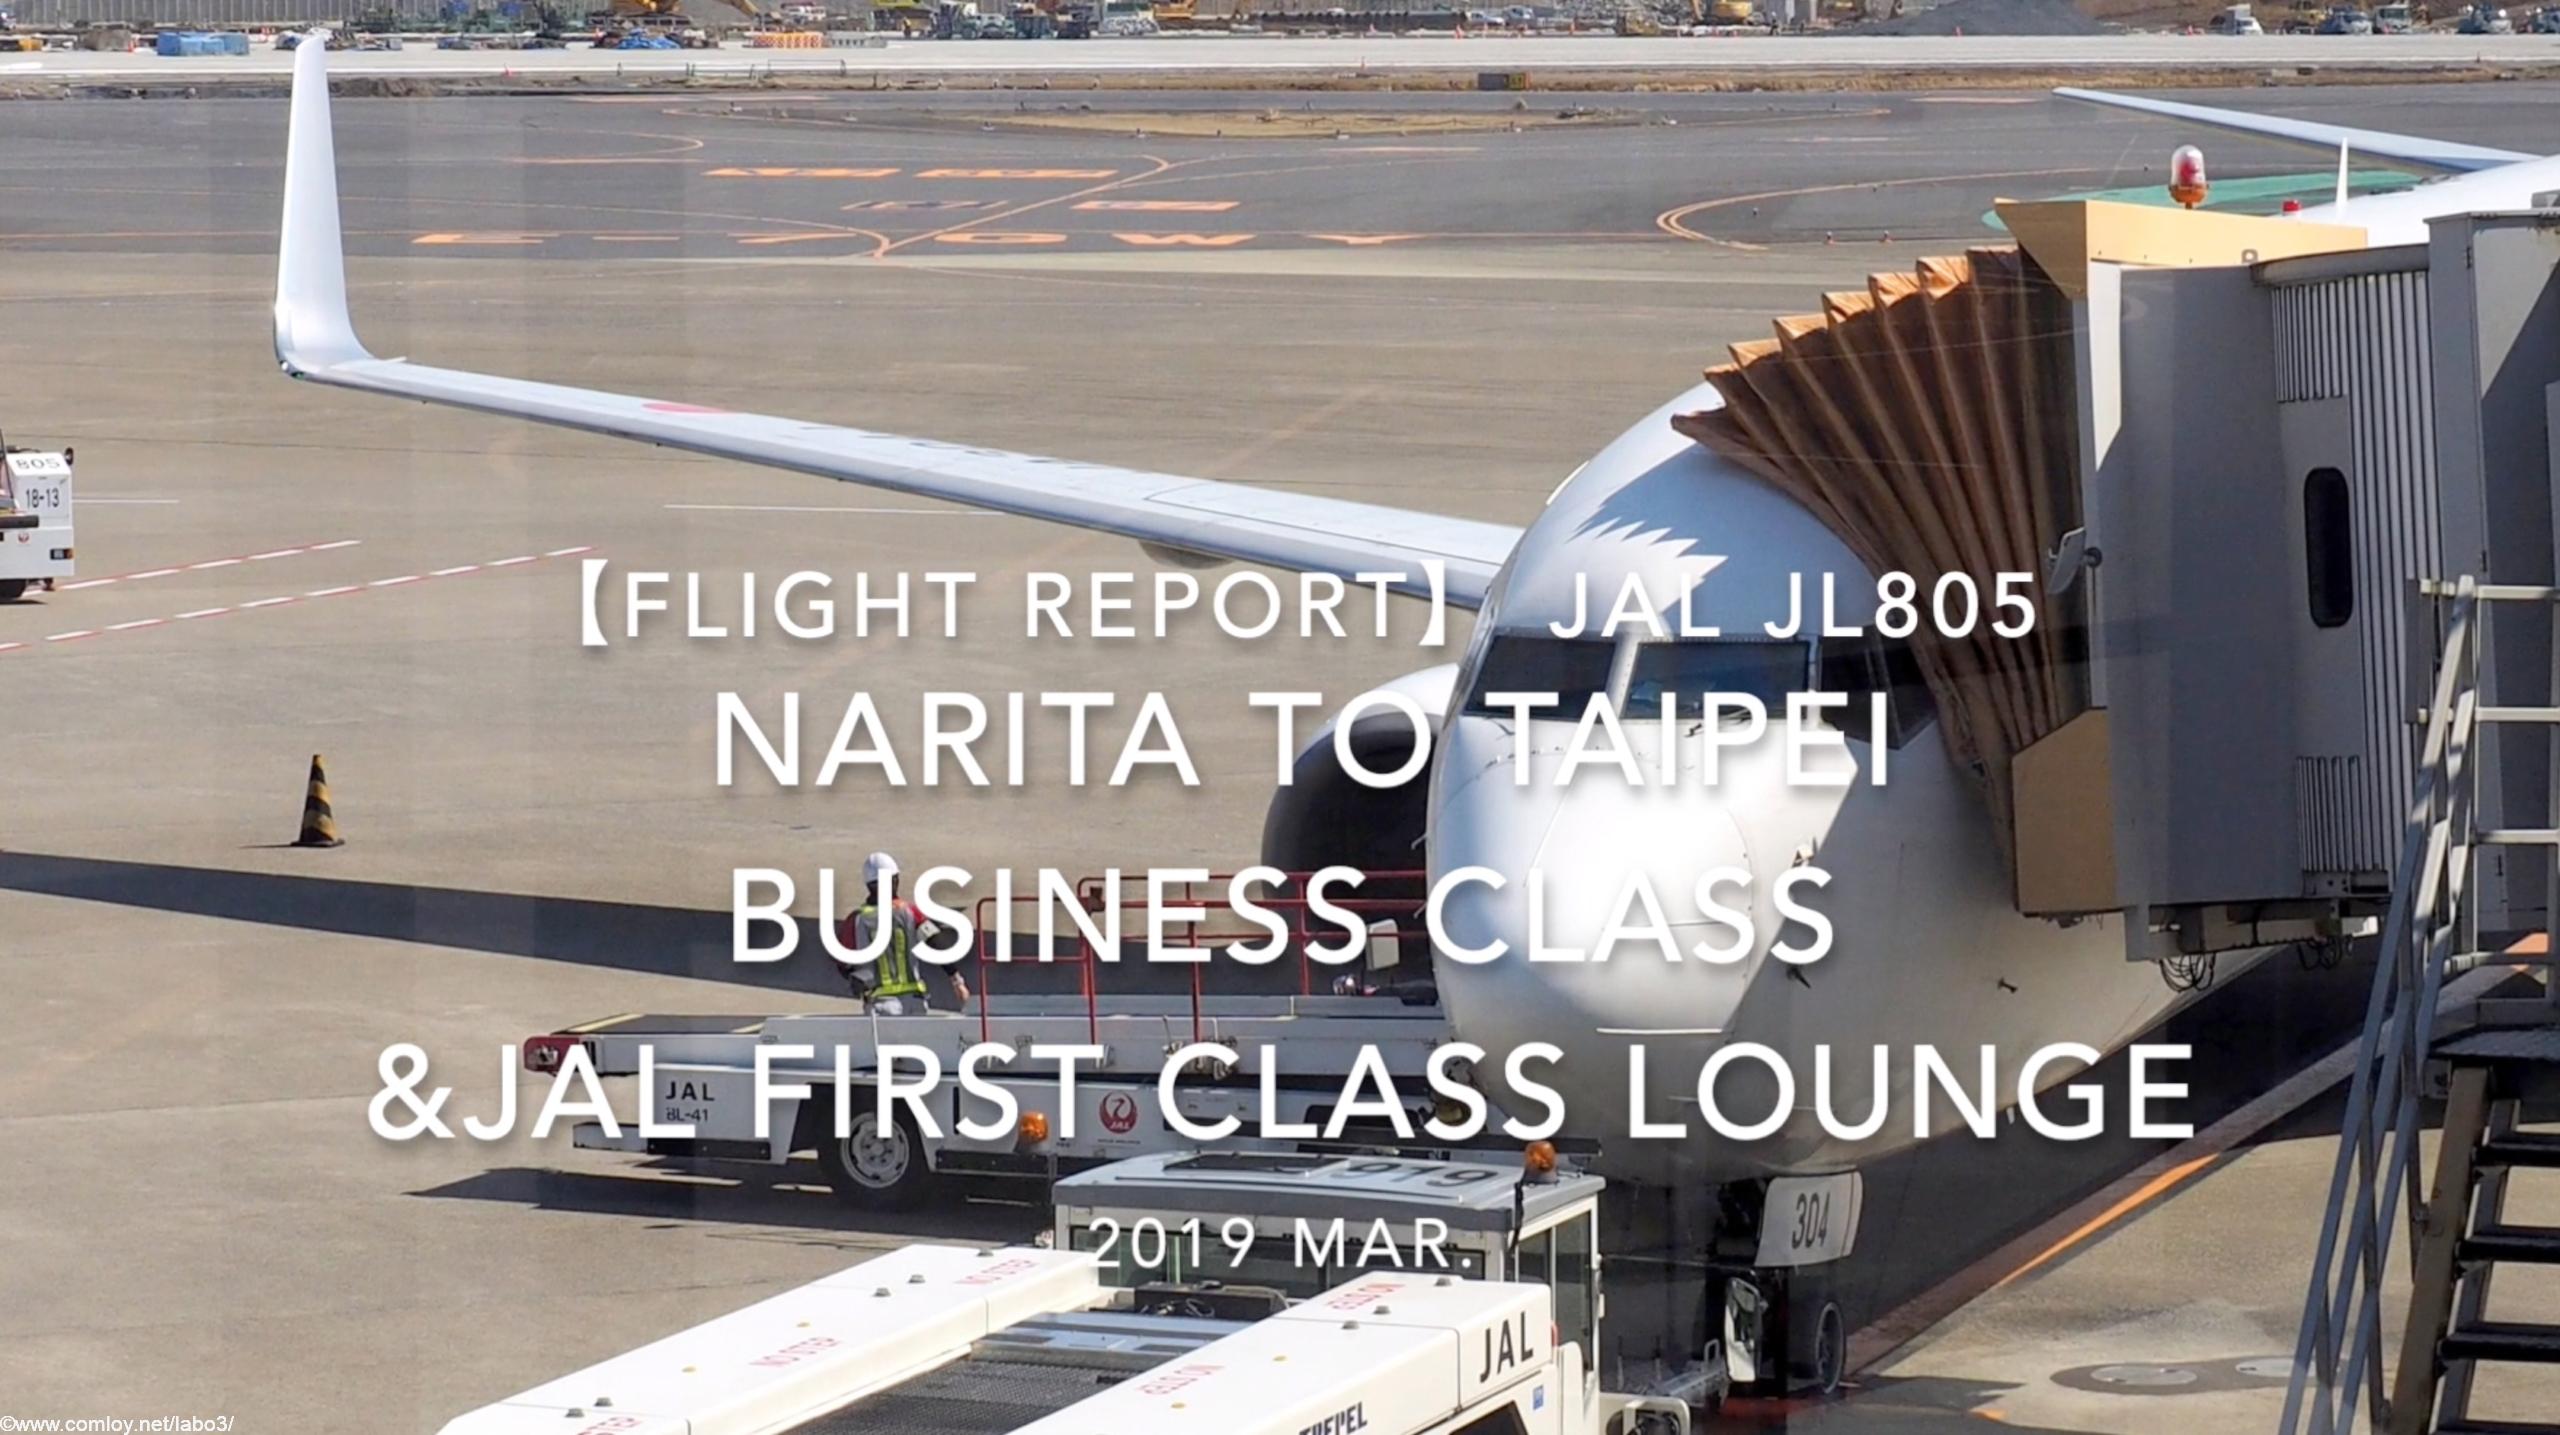 【Flight Report】 Japan Airlines JL805 NARITA TO TAIPEI &JAL First Class LOUNGE 2019 Mar 日本航空 成田 - 台北 搭乗記